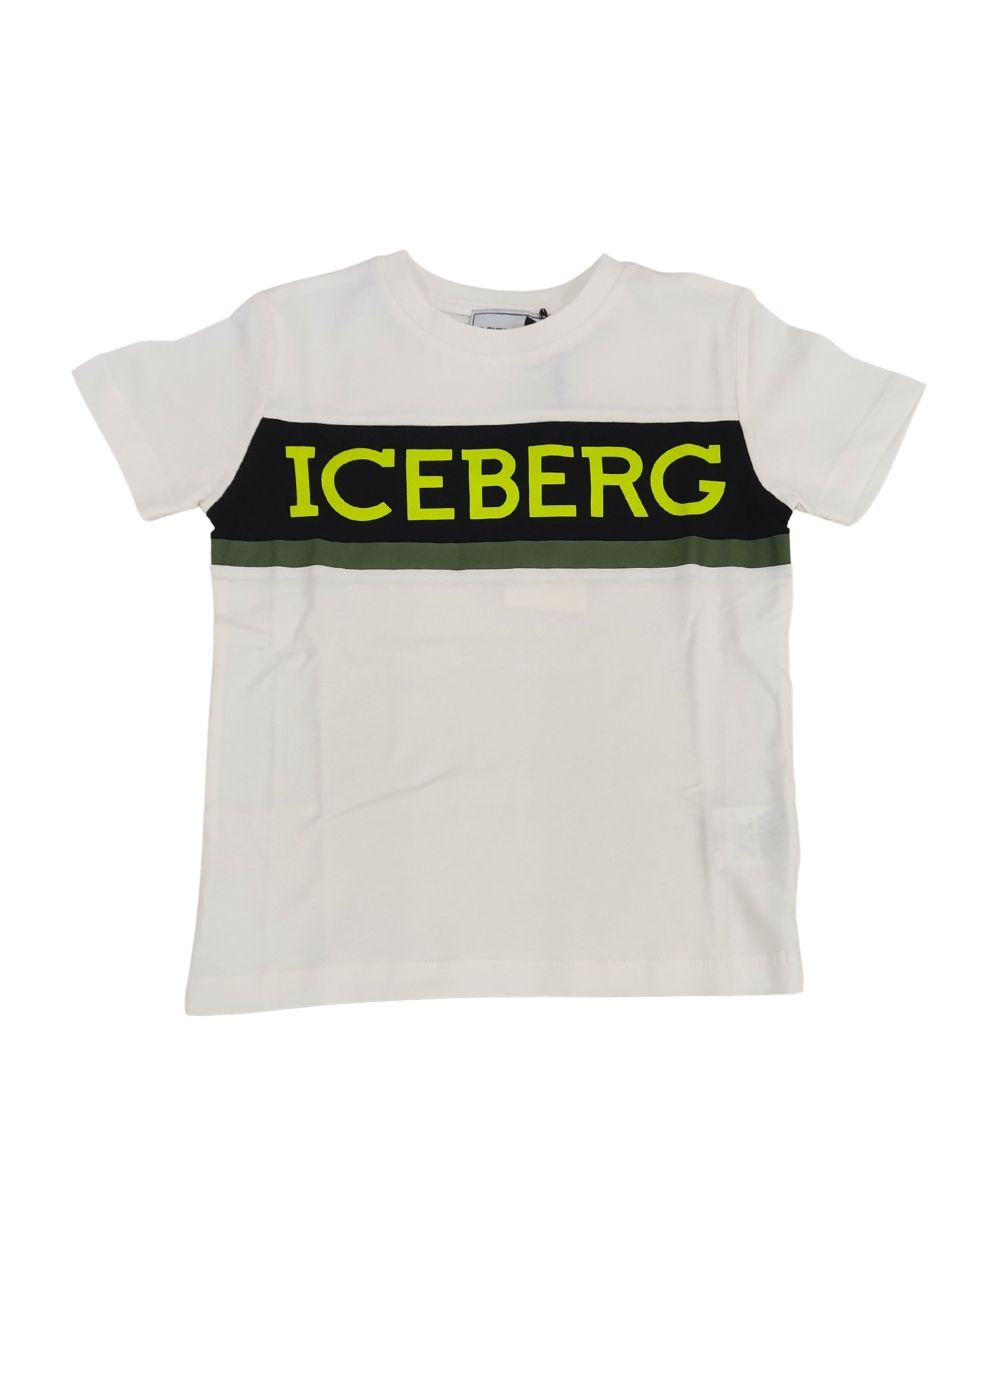 Featured image for “Iceberg T-shirt logo verde”